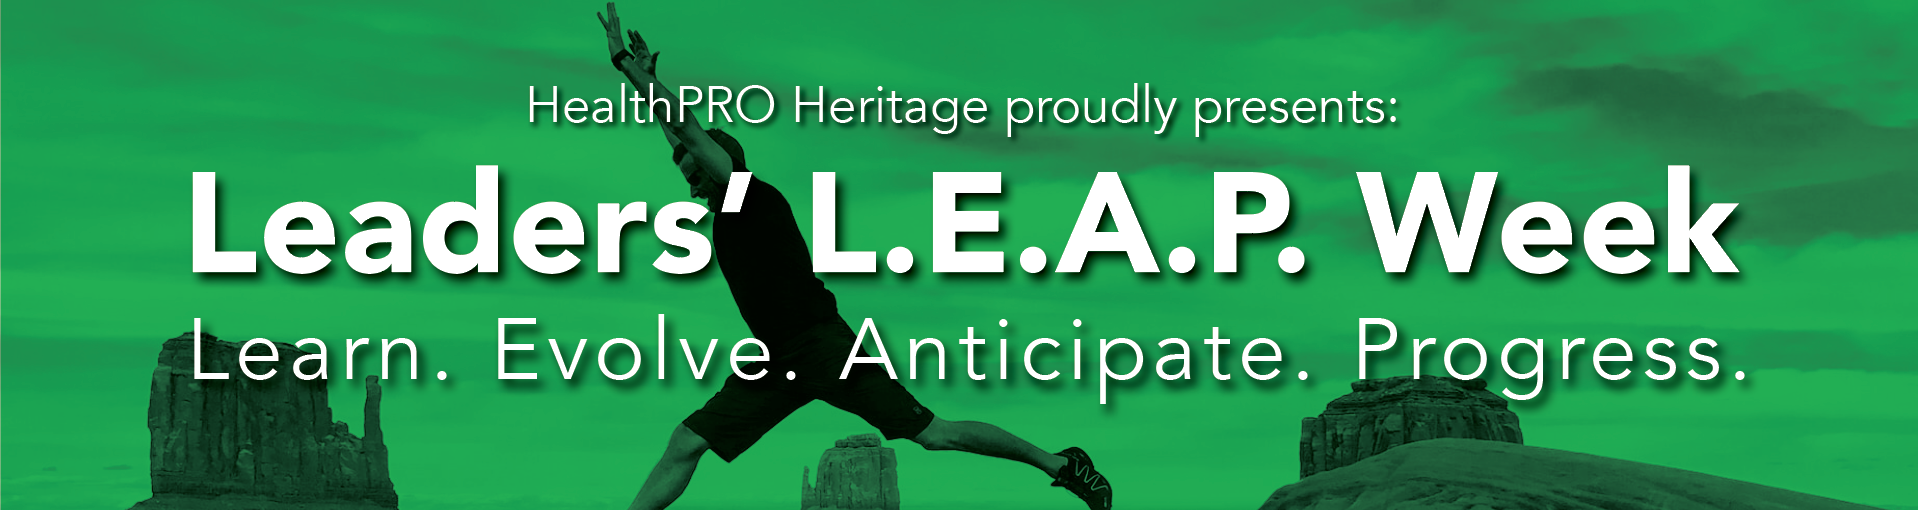 HealthPRO Heritage proudly presents: Leaders' LEAP Week